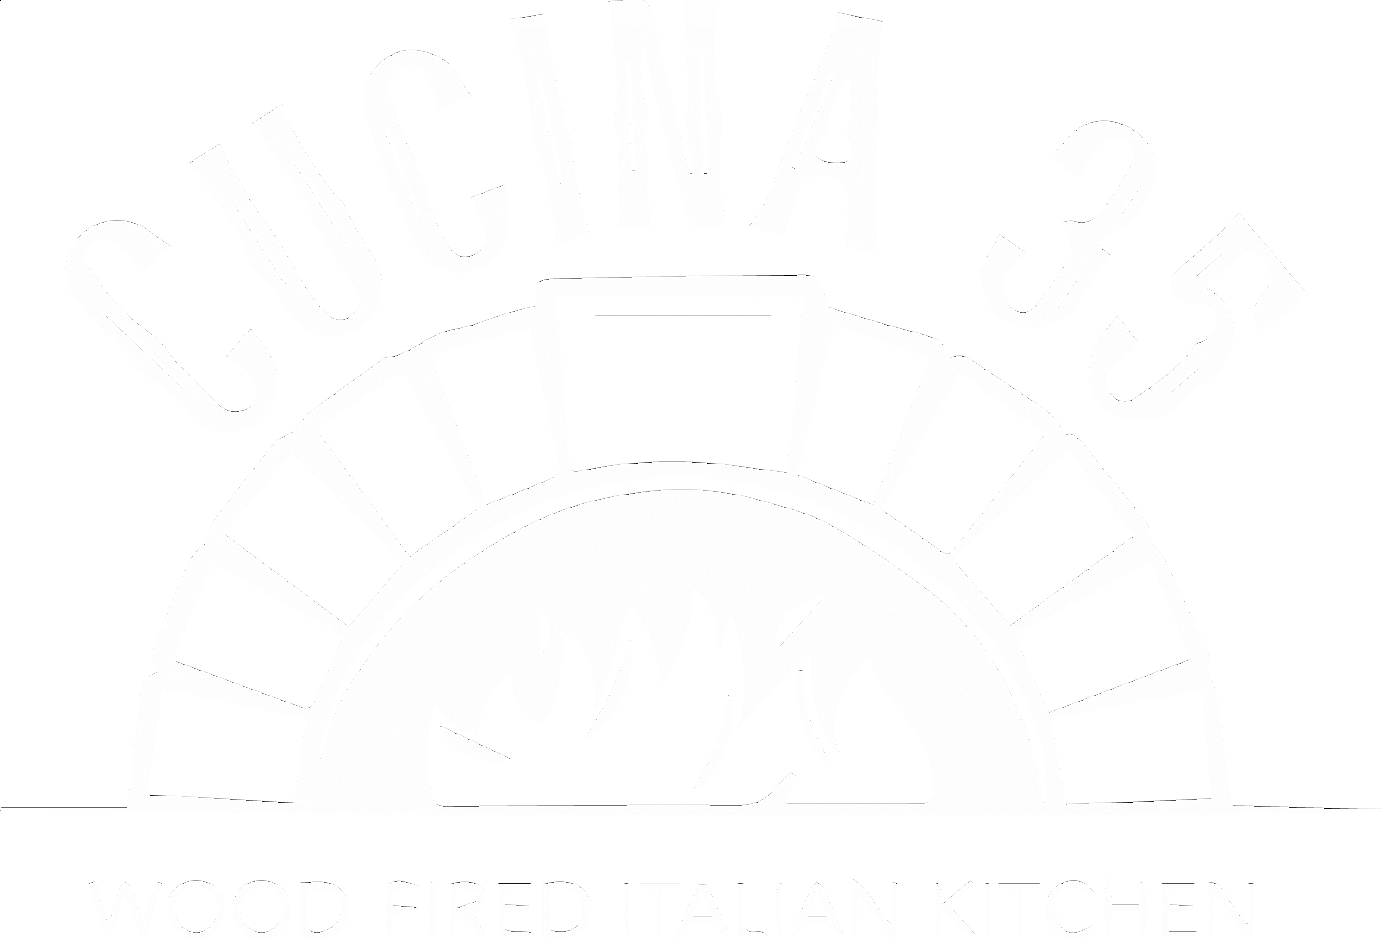 Cucina on 35th logo scroll